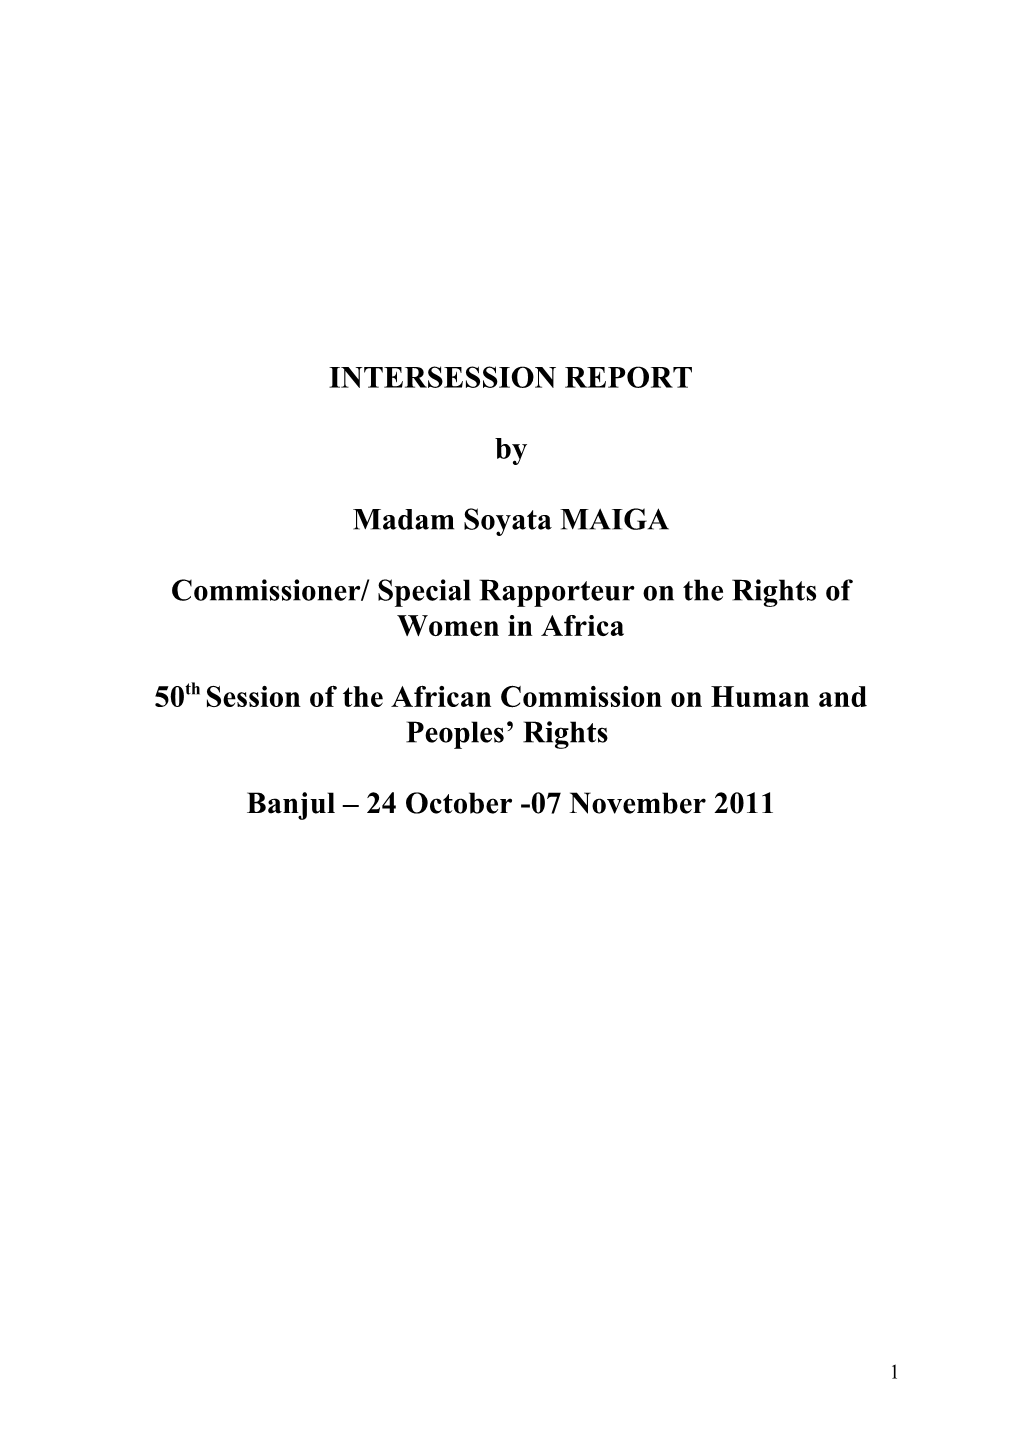 Rapport D Inter Session